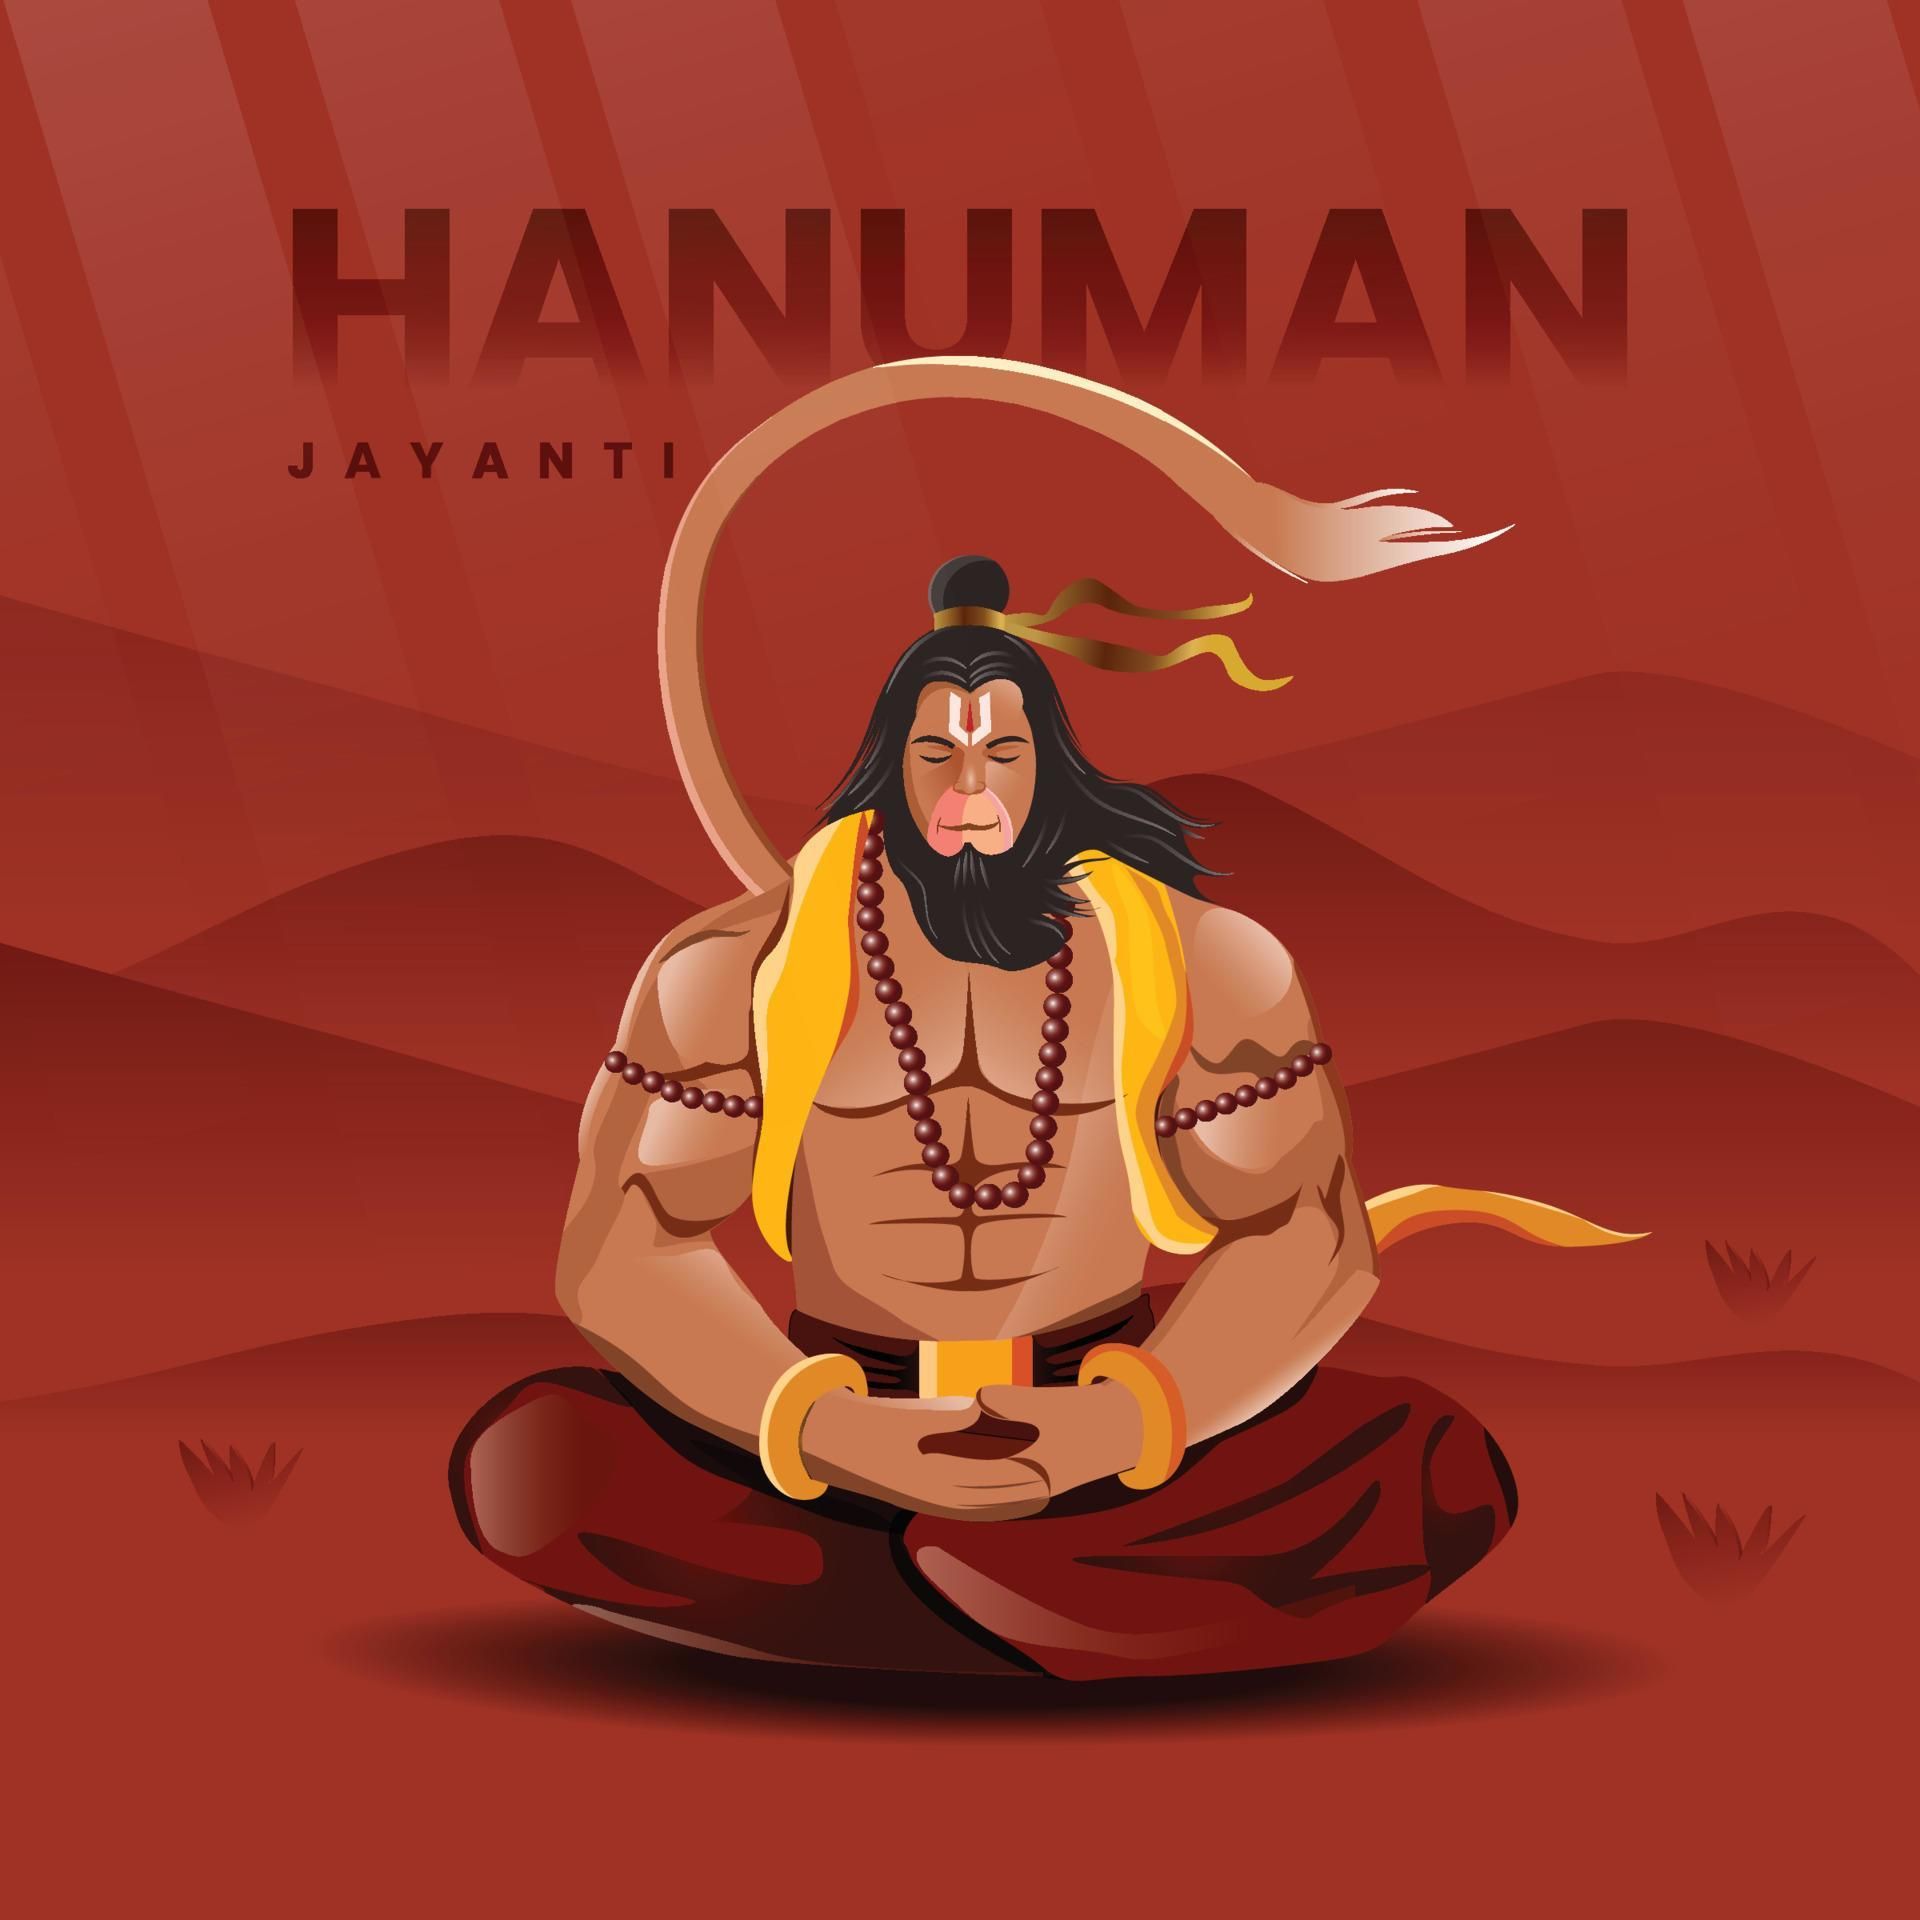 Jay Shri Ram,Happy Hanuman Jayanti, celebrates the birth of Lord